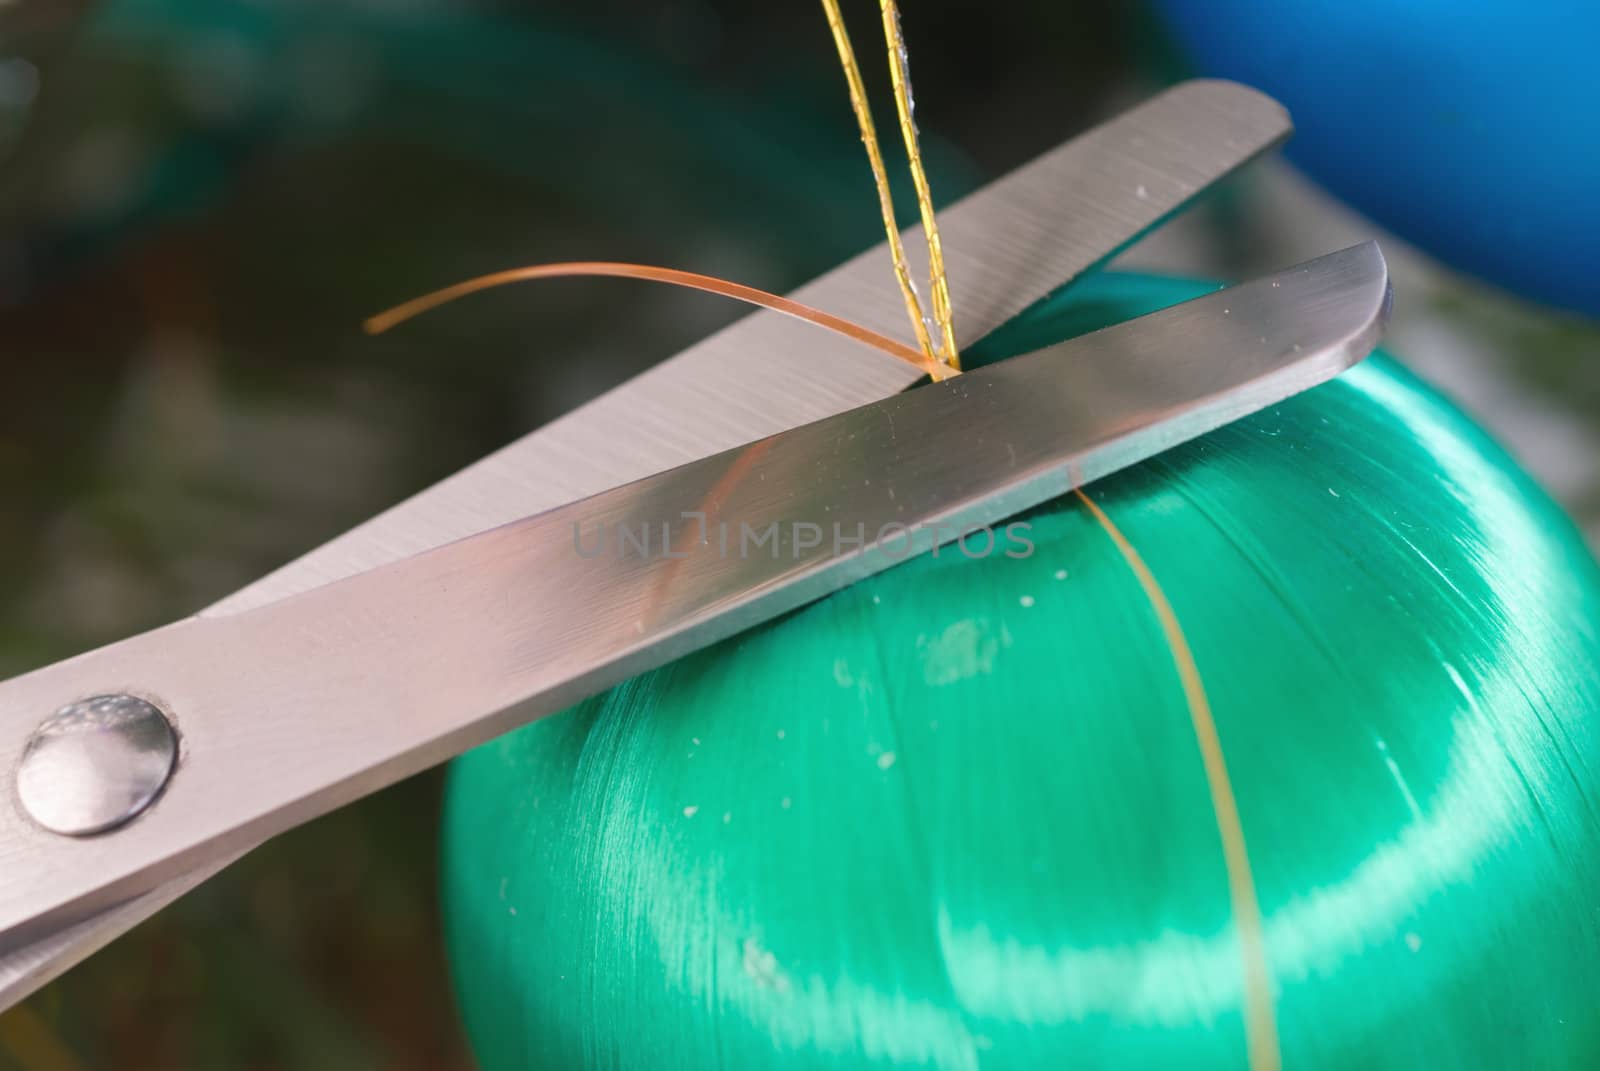 Trimmed string toys for Christmas spruce scissors by krivsun